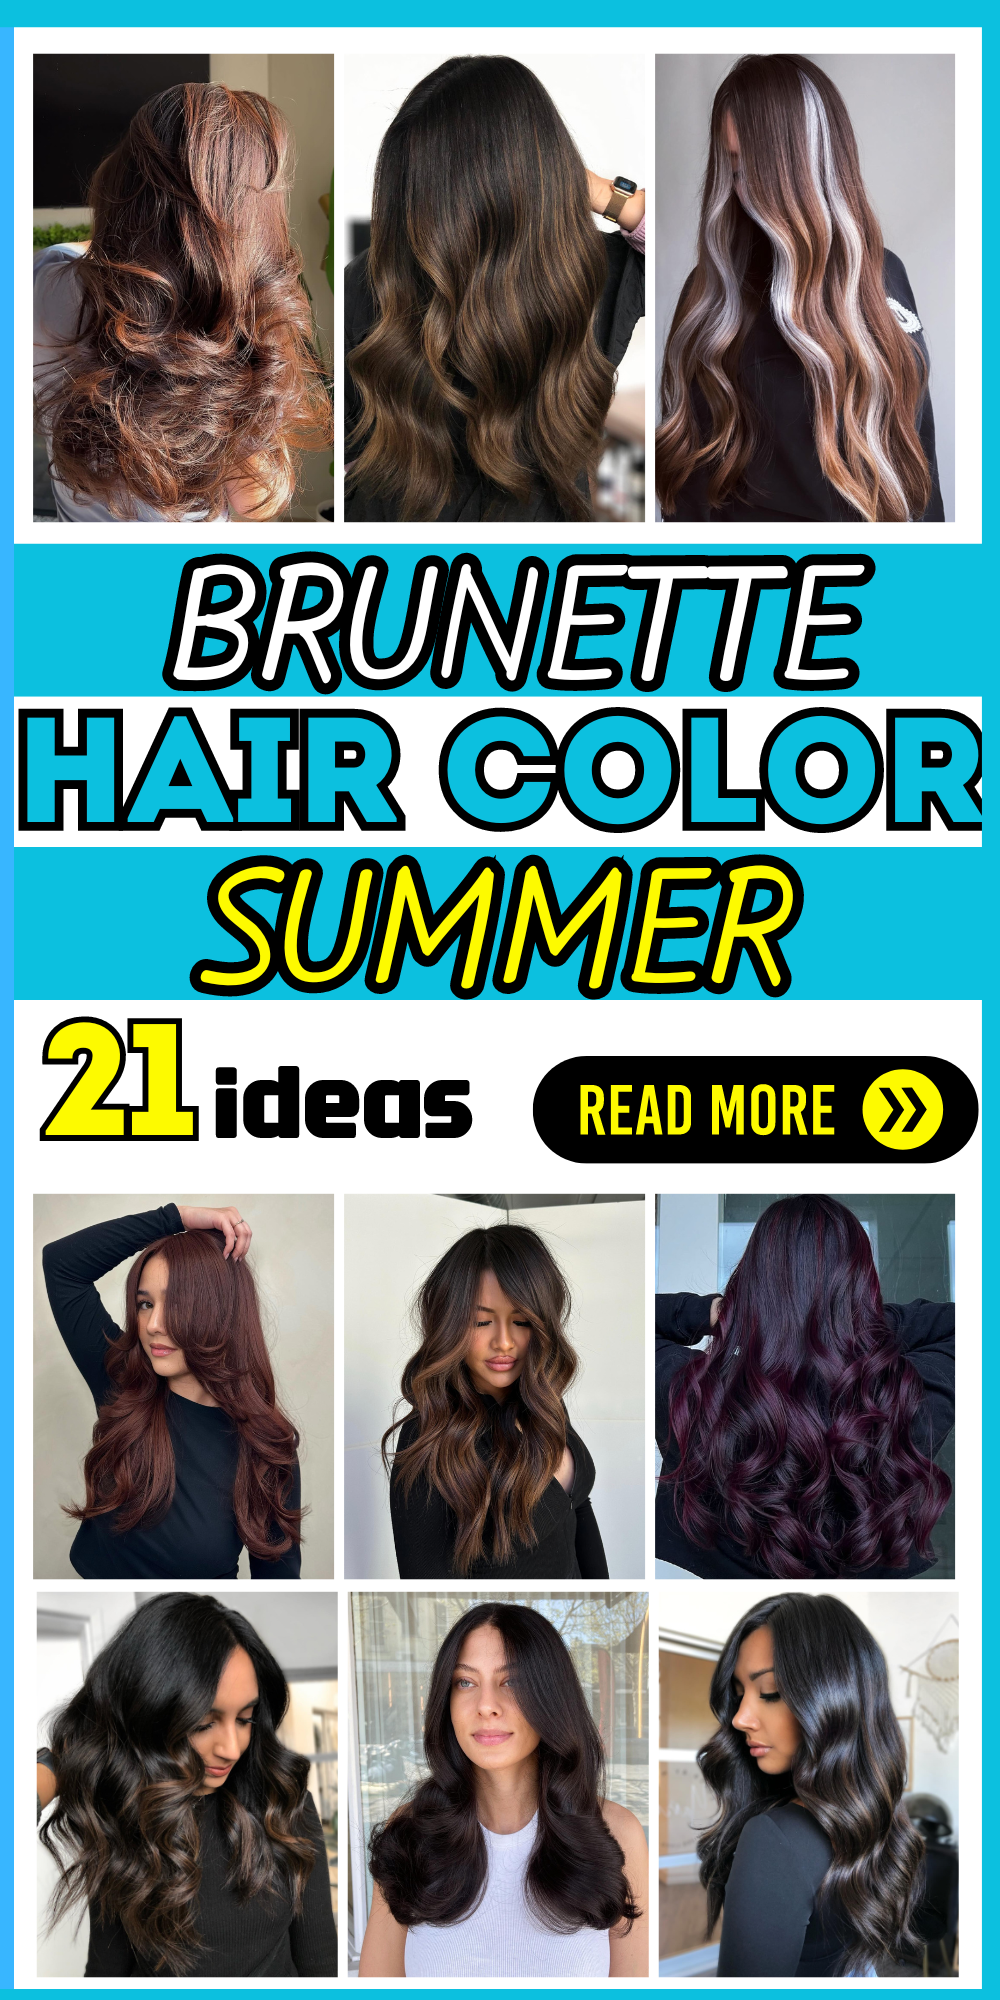 Summer Brunette Hair Color Ideas: Vibrant Tones & Care Tips